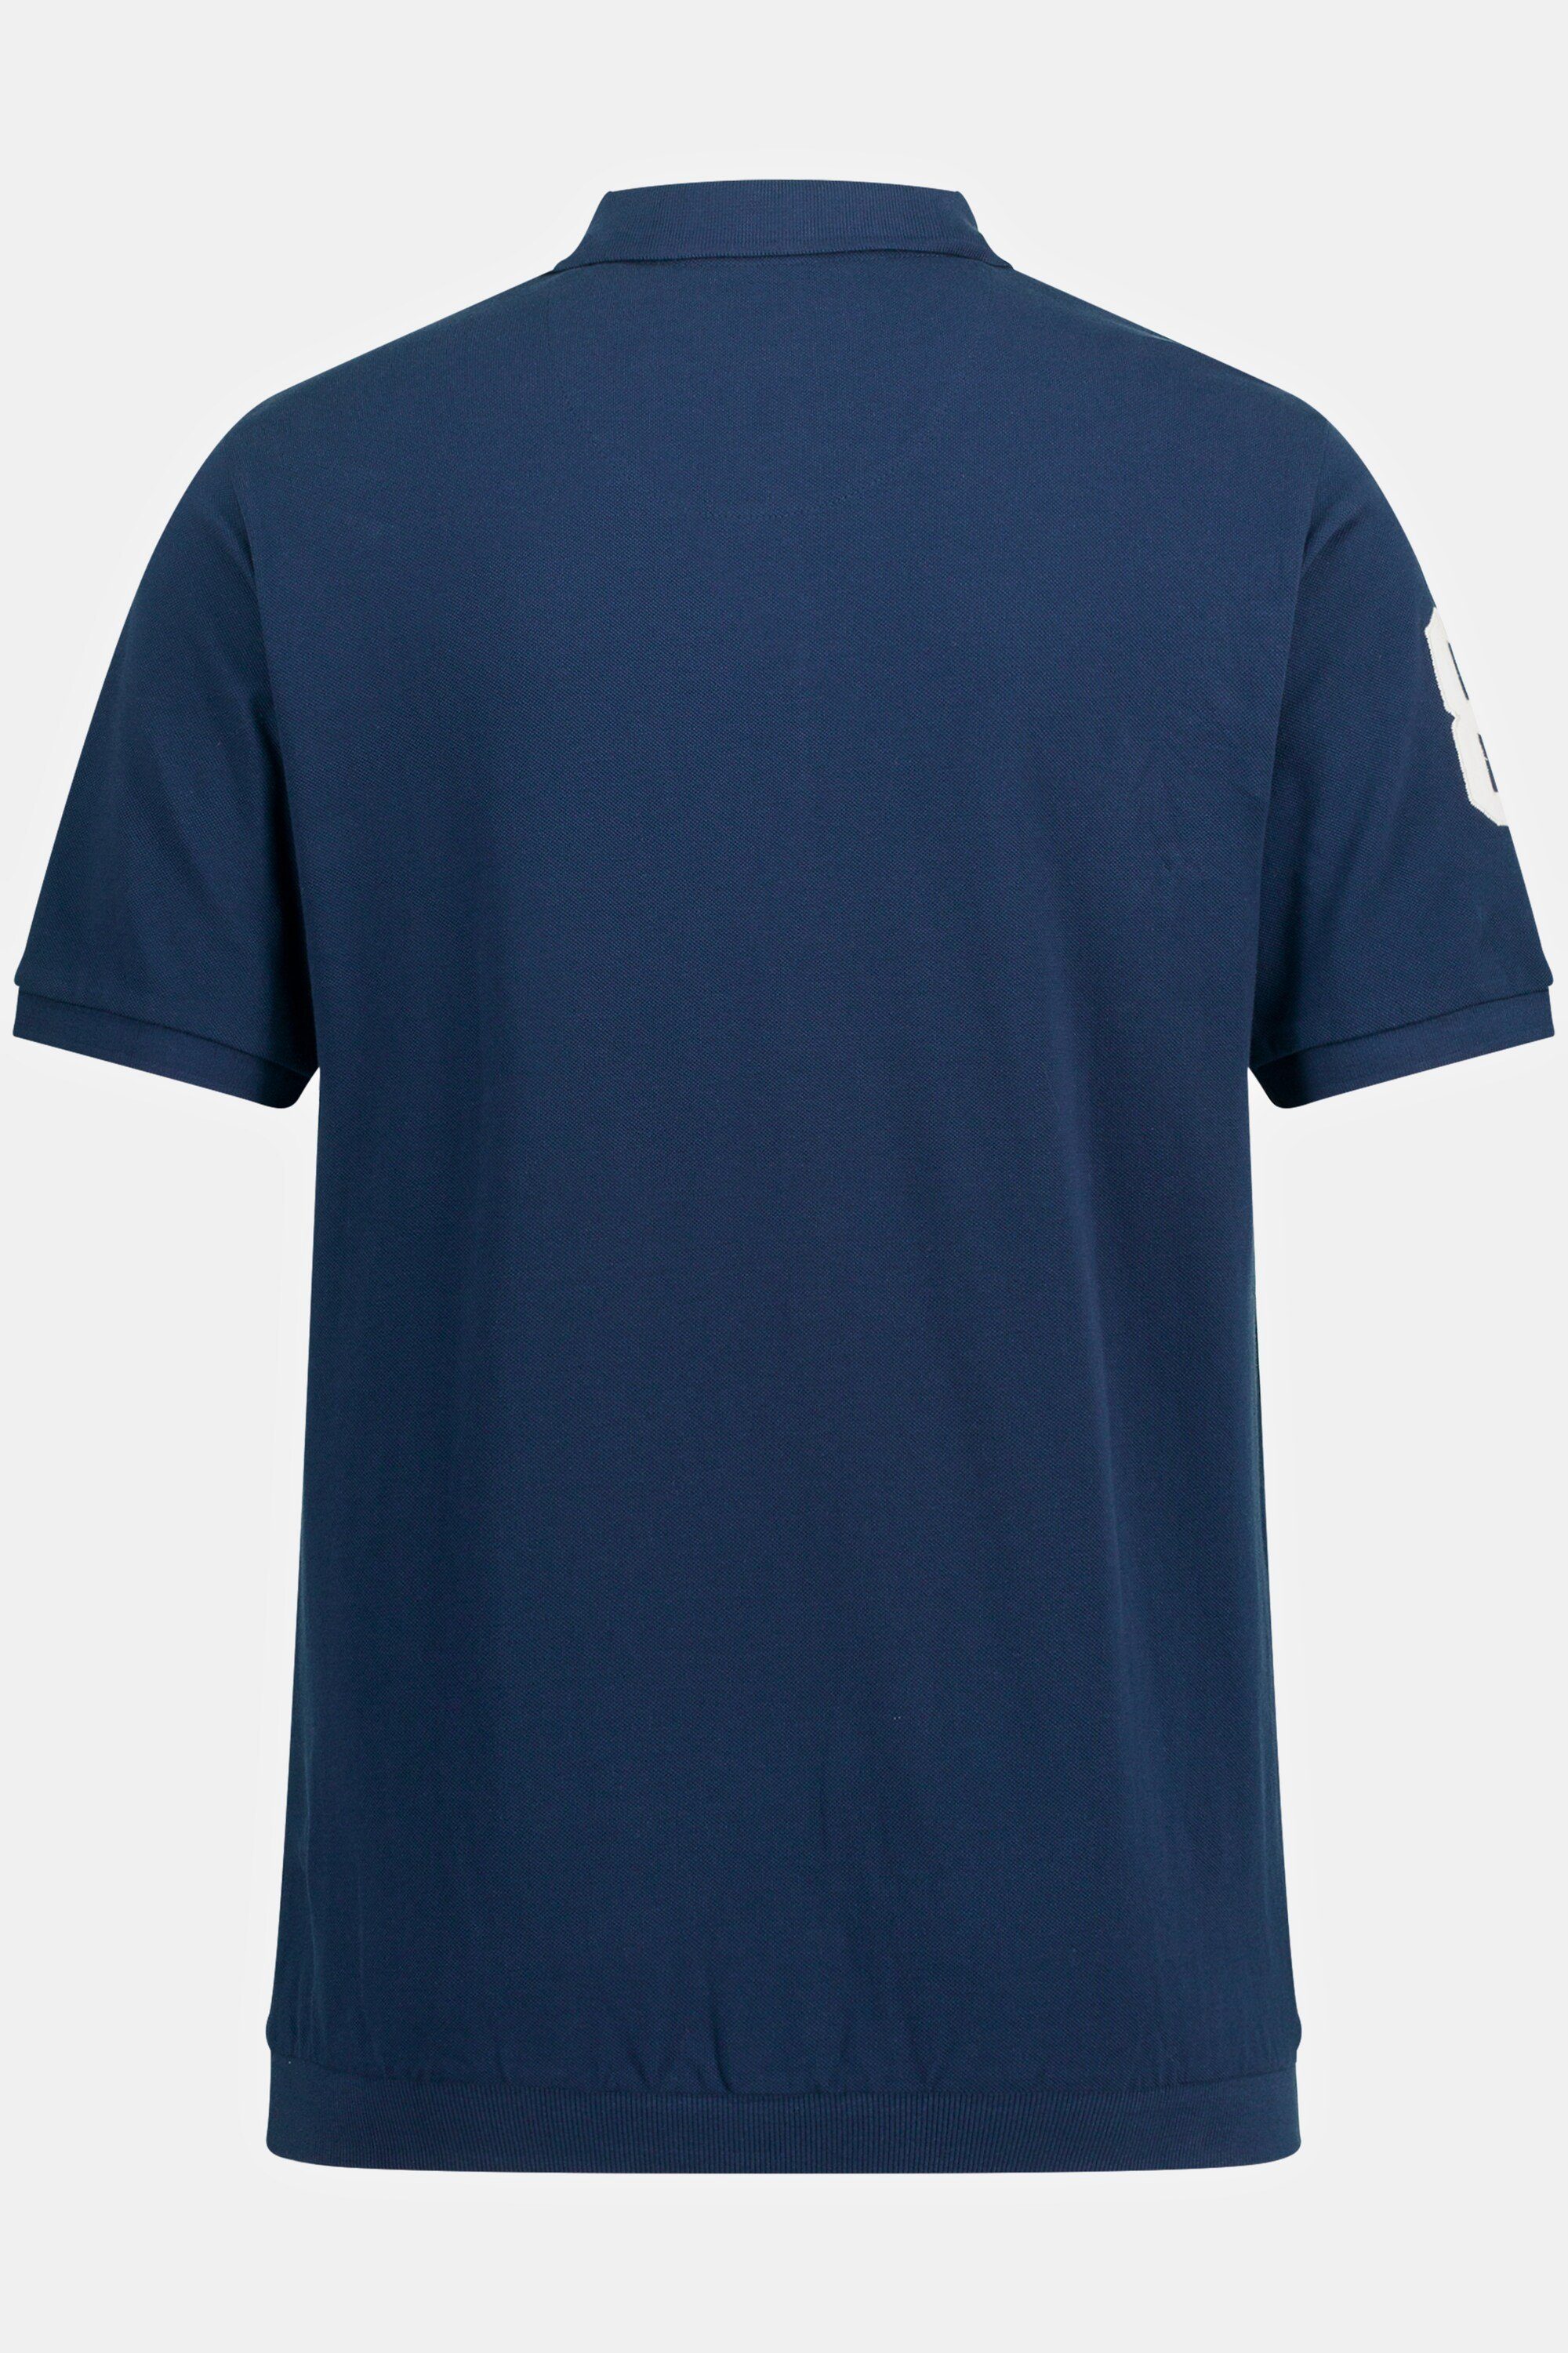 mattes JP1880 8 Bauchfit nachtblau bis Poloshirt Poloshirt XL Halbarm